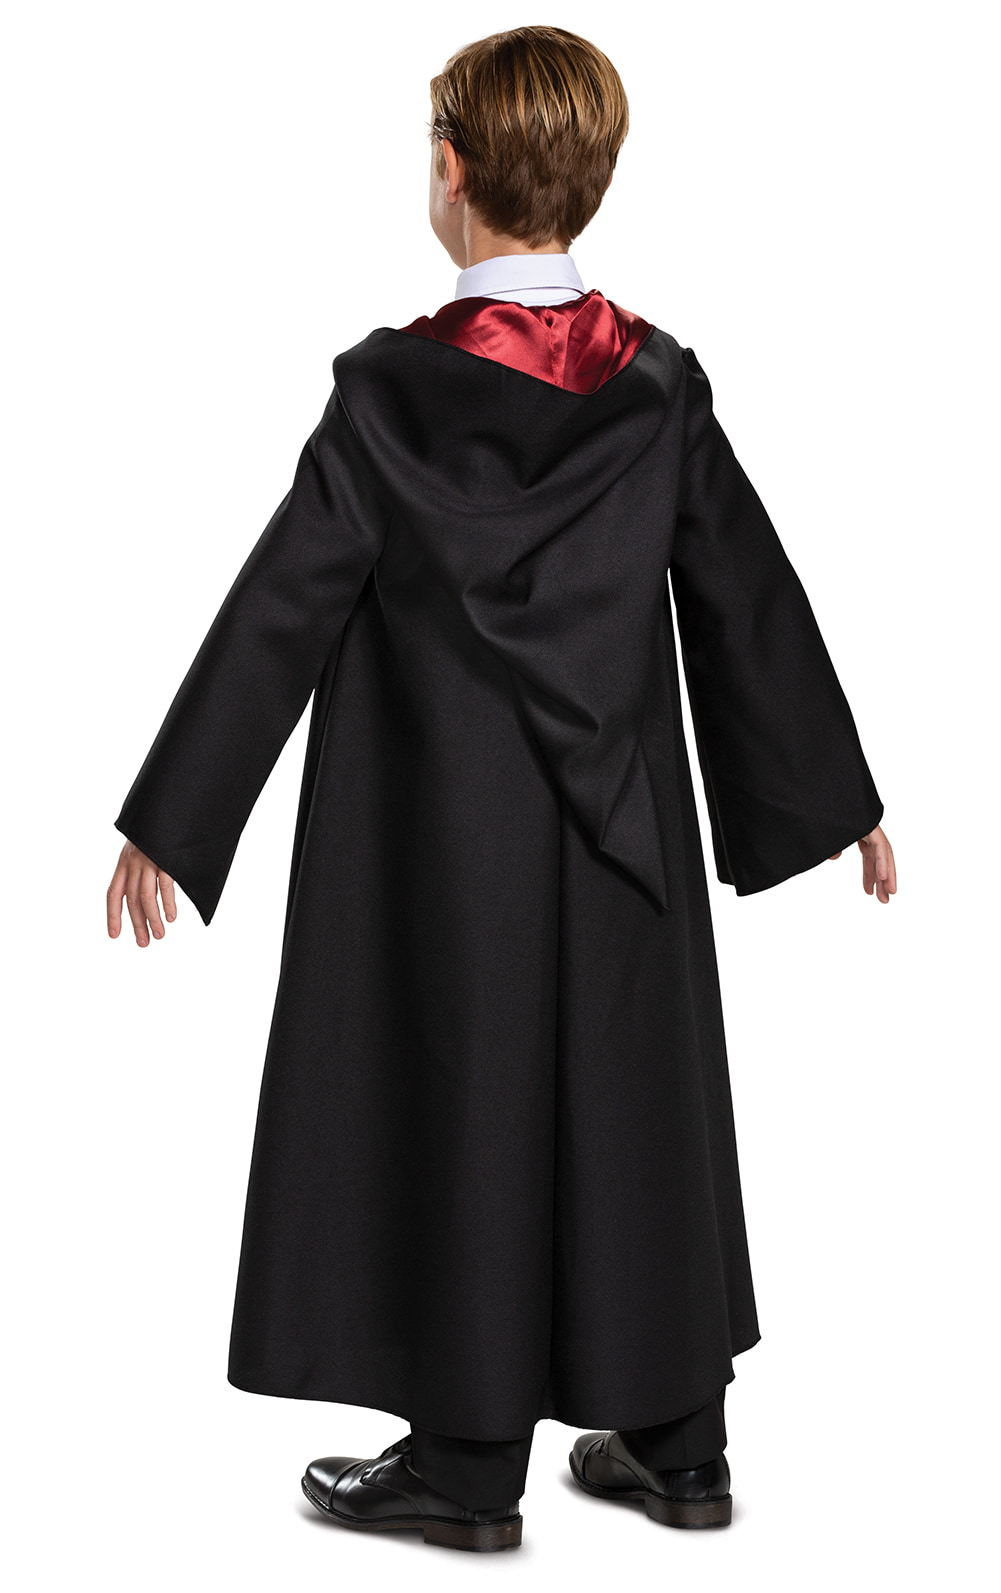 Slytherin Robe Prestige Child Costume 